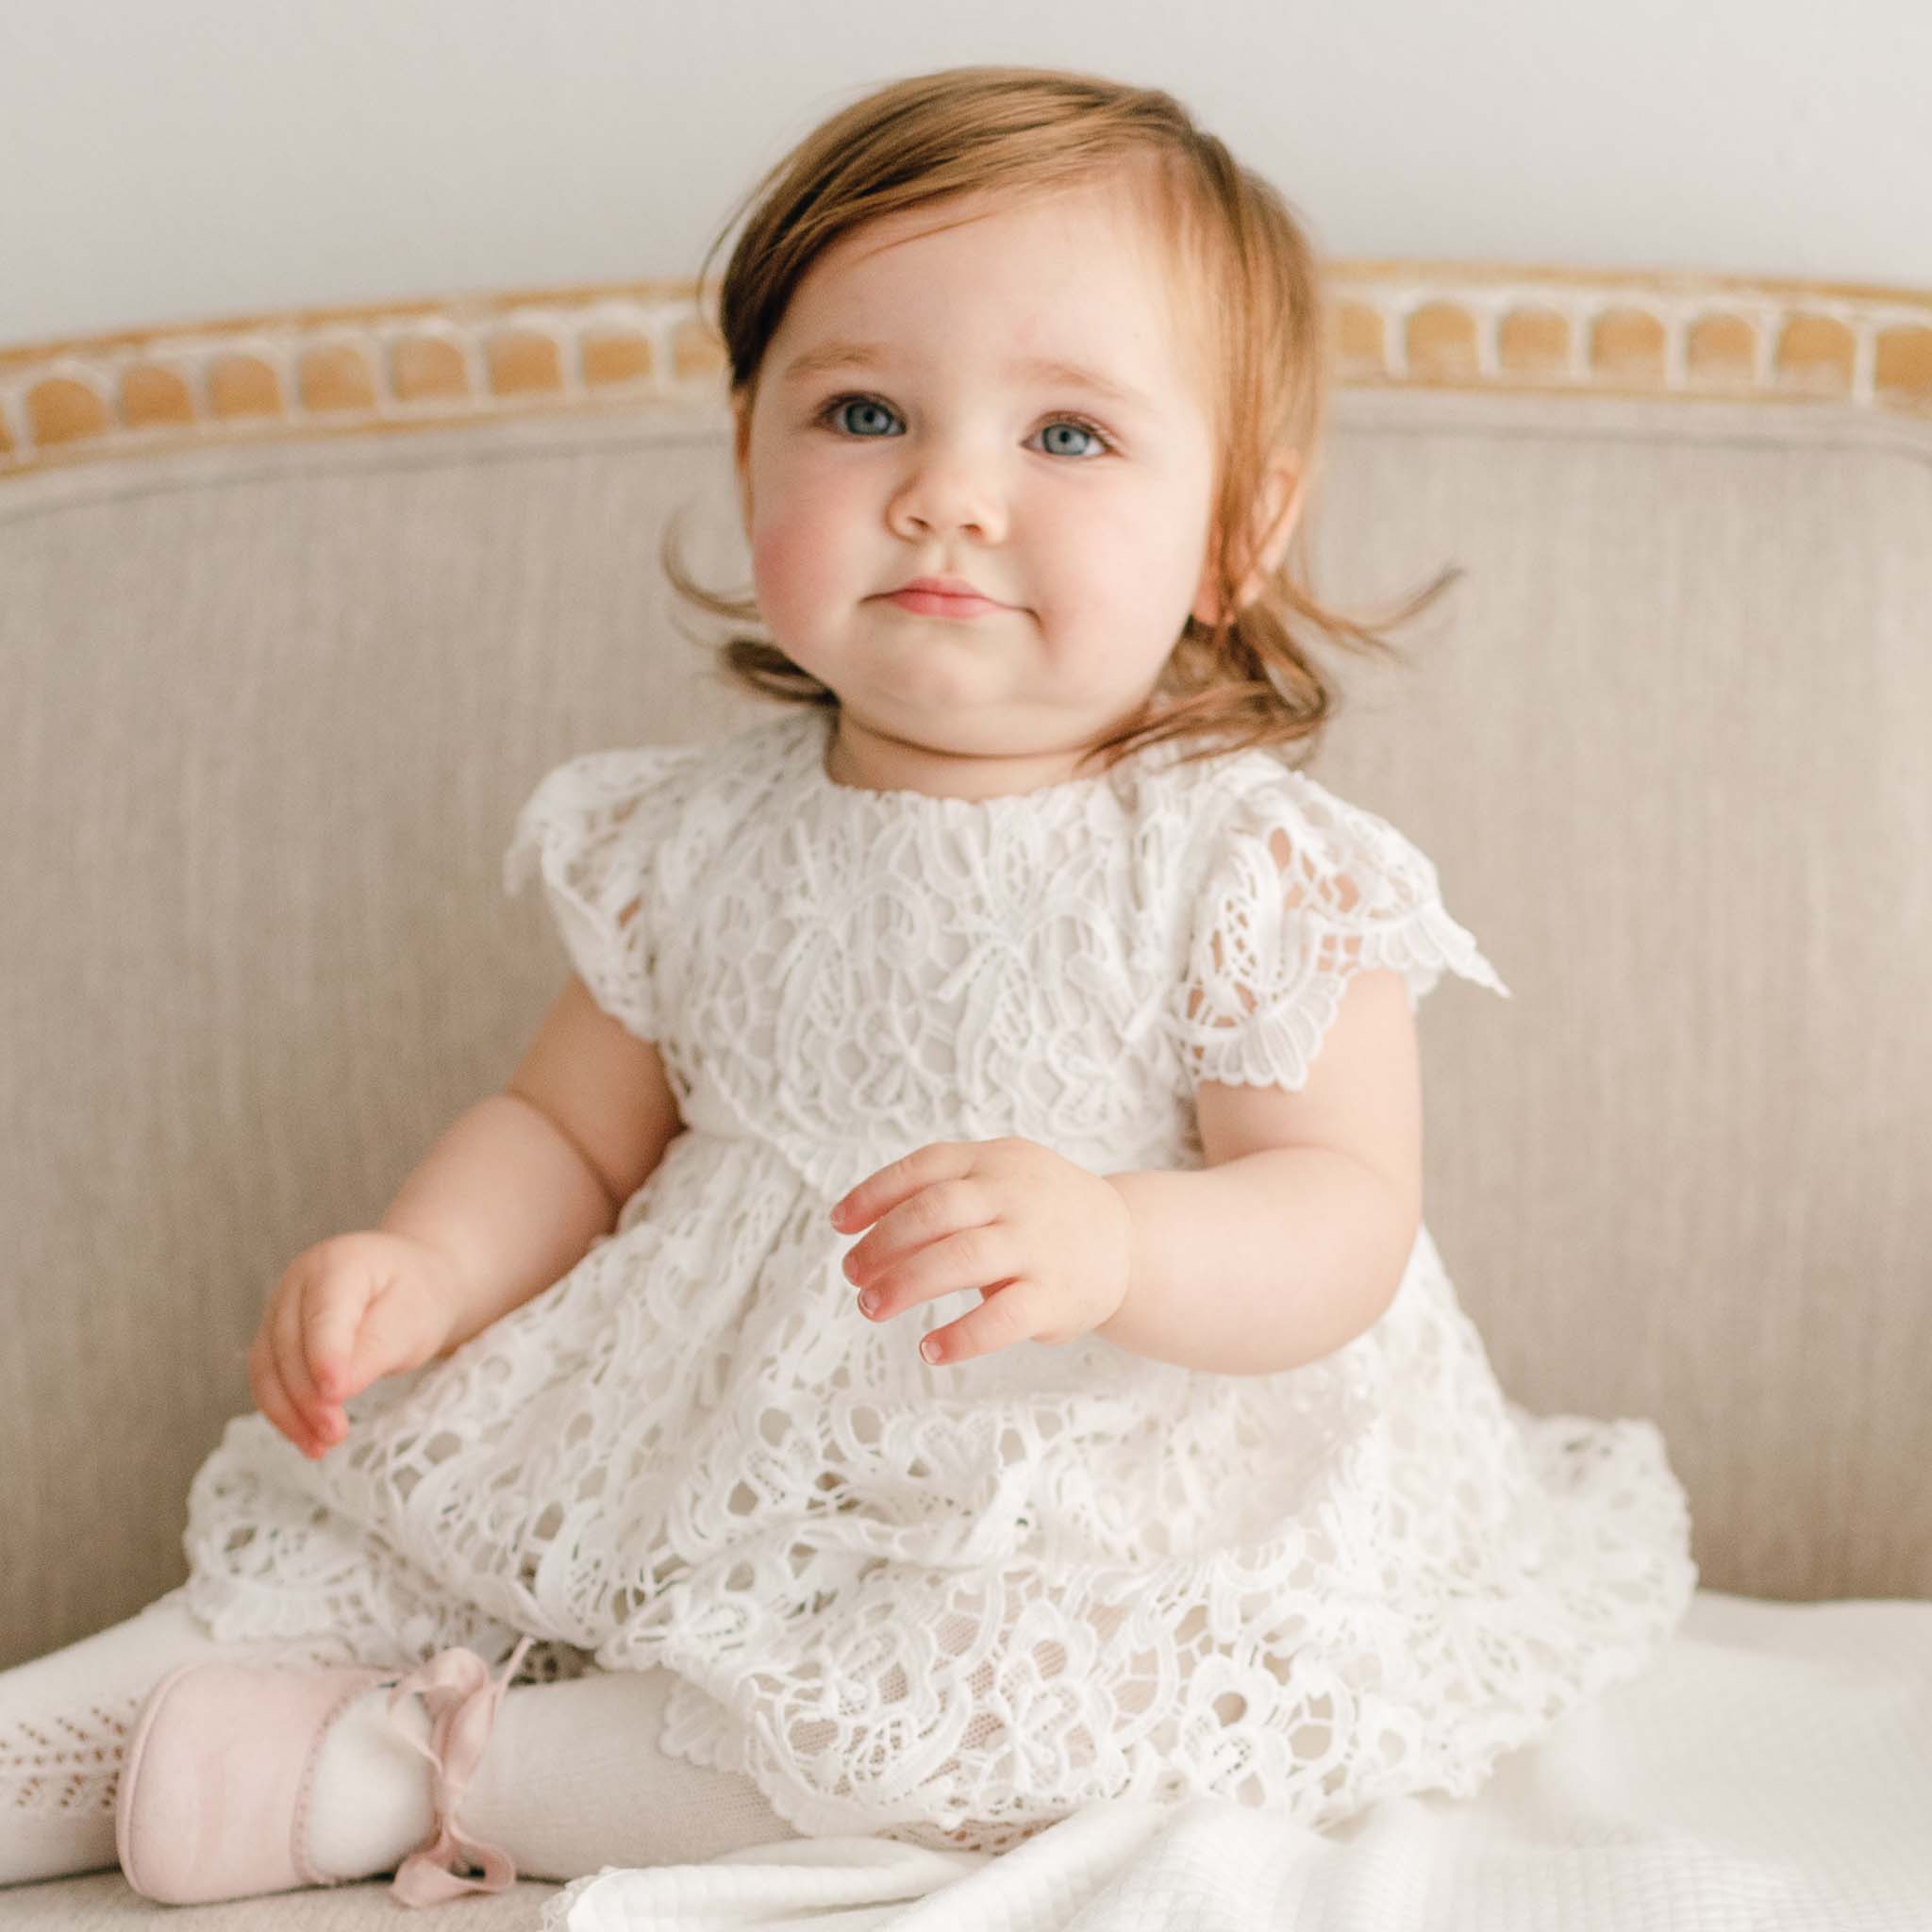 baptism dresses for baby girl